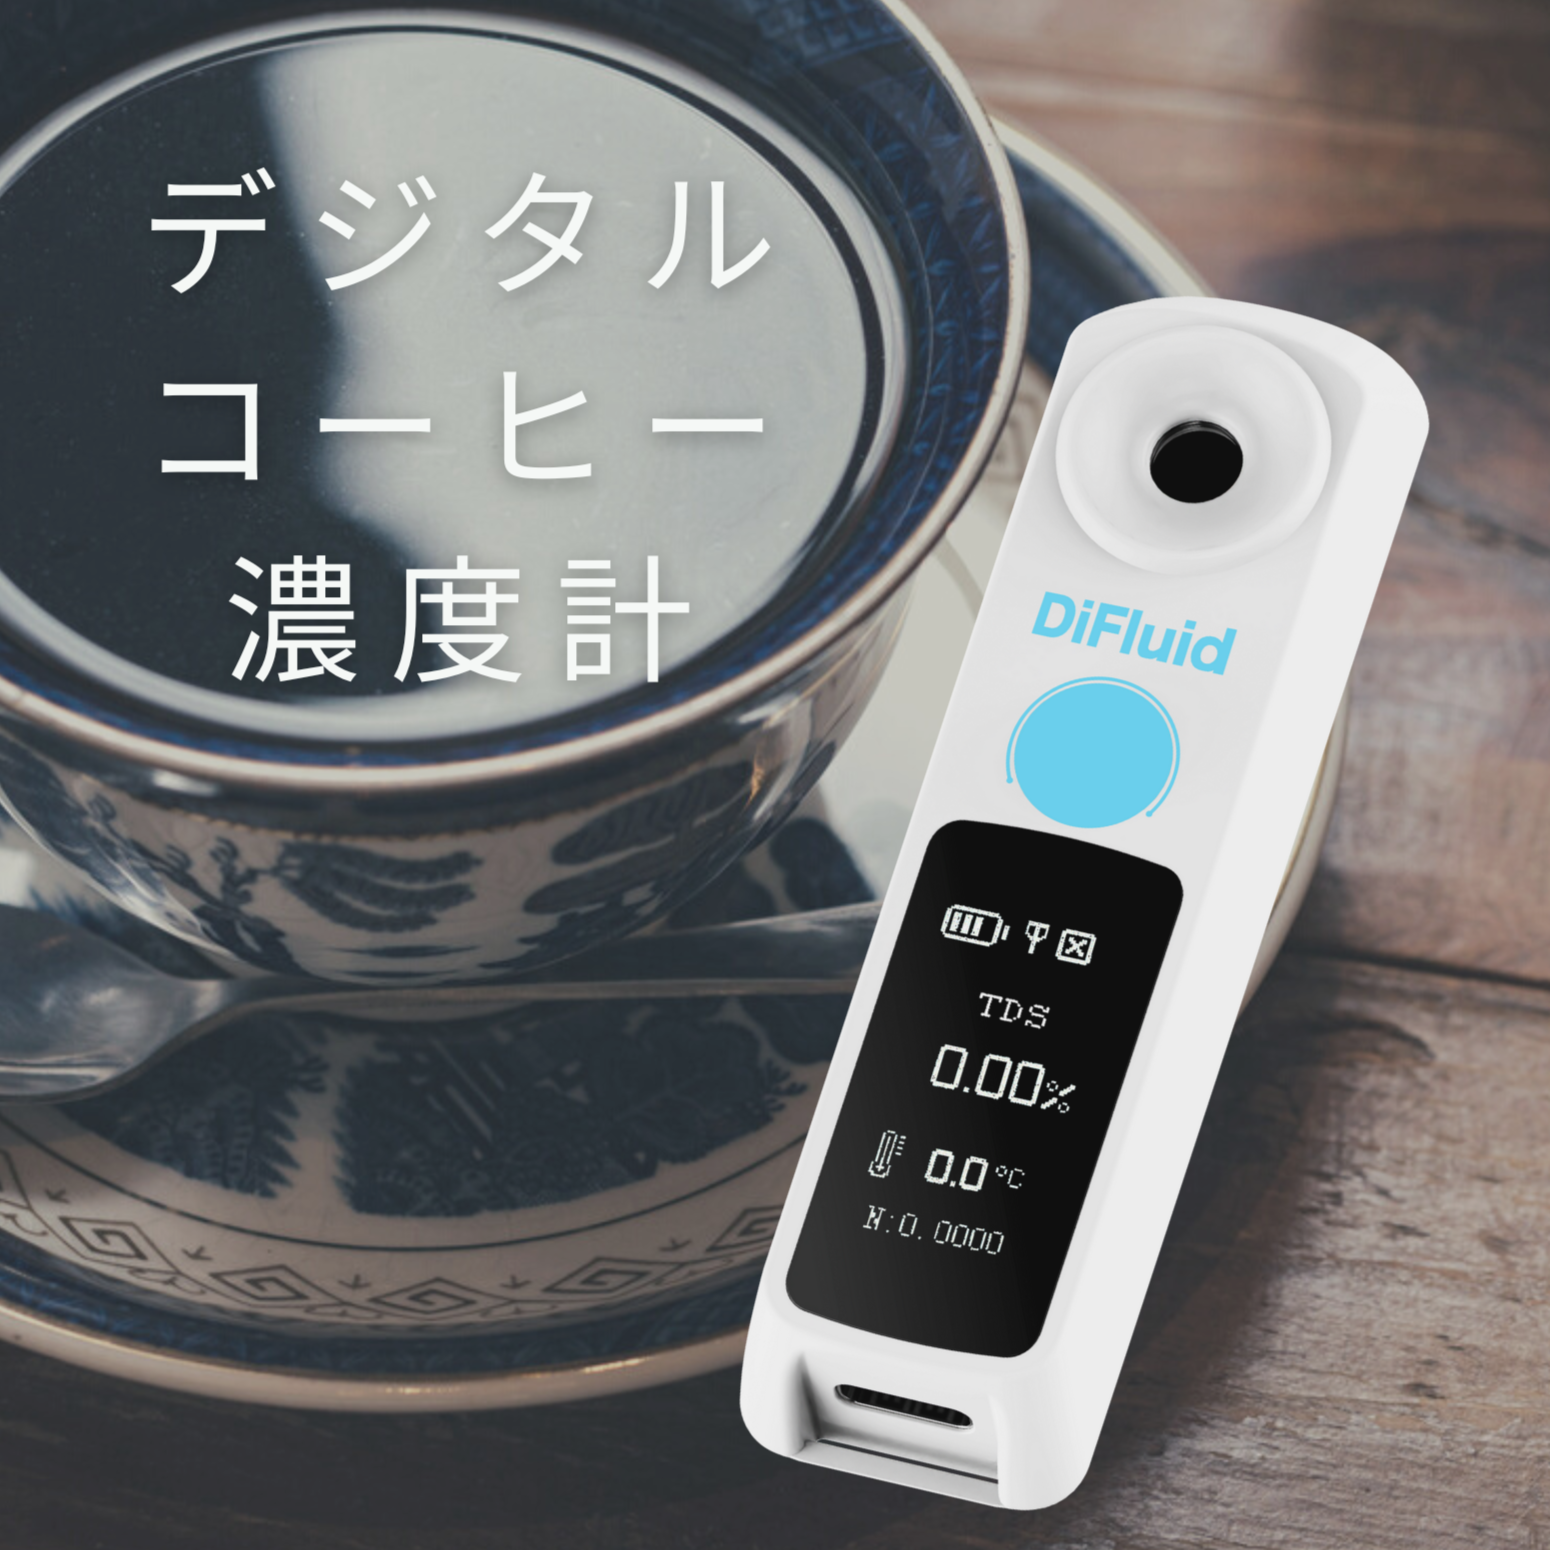 DiFluid Coffee 小型 デジタル コーヒー濃度計 TDSメーター - キッチン 